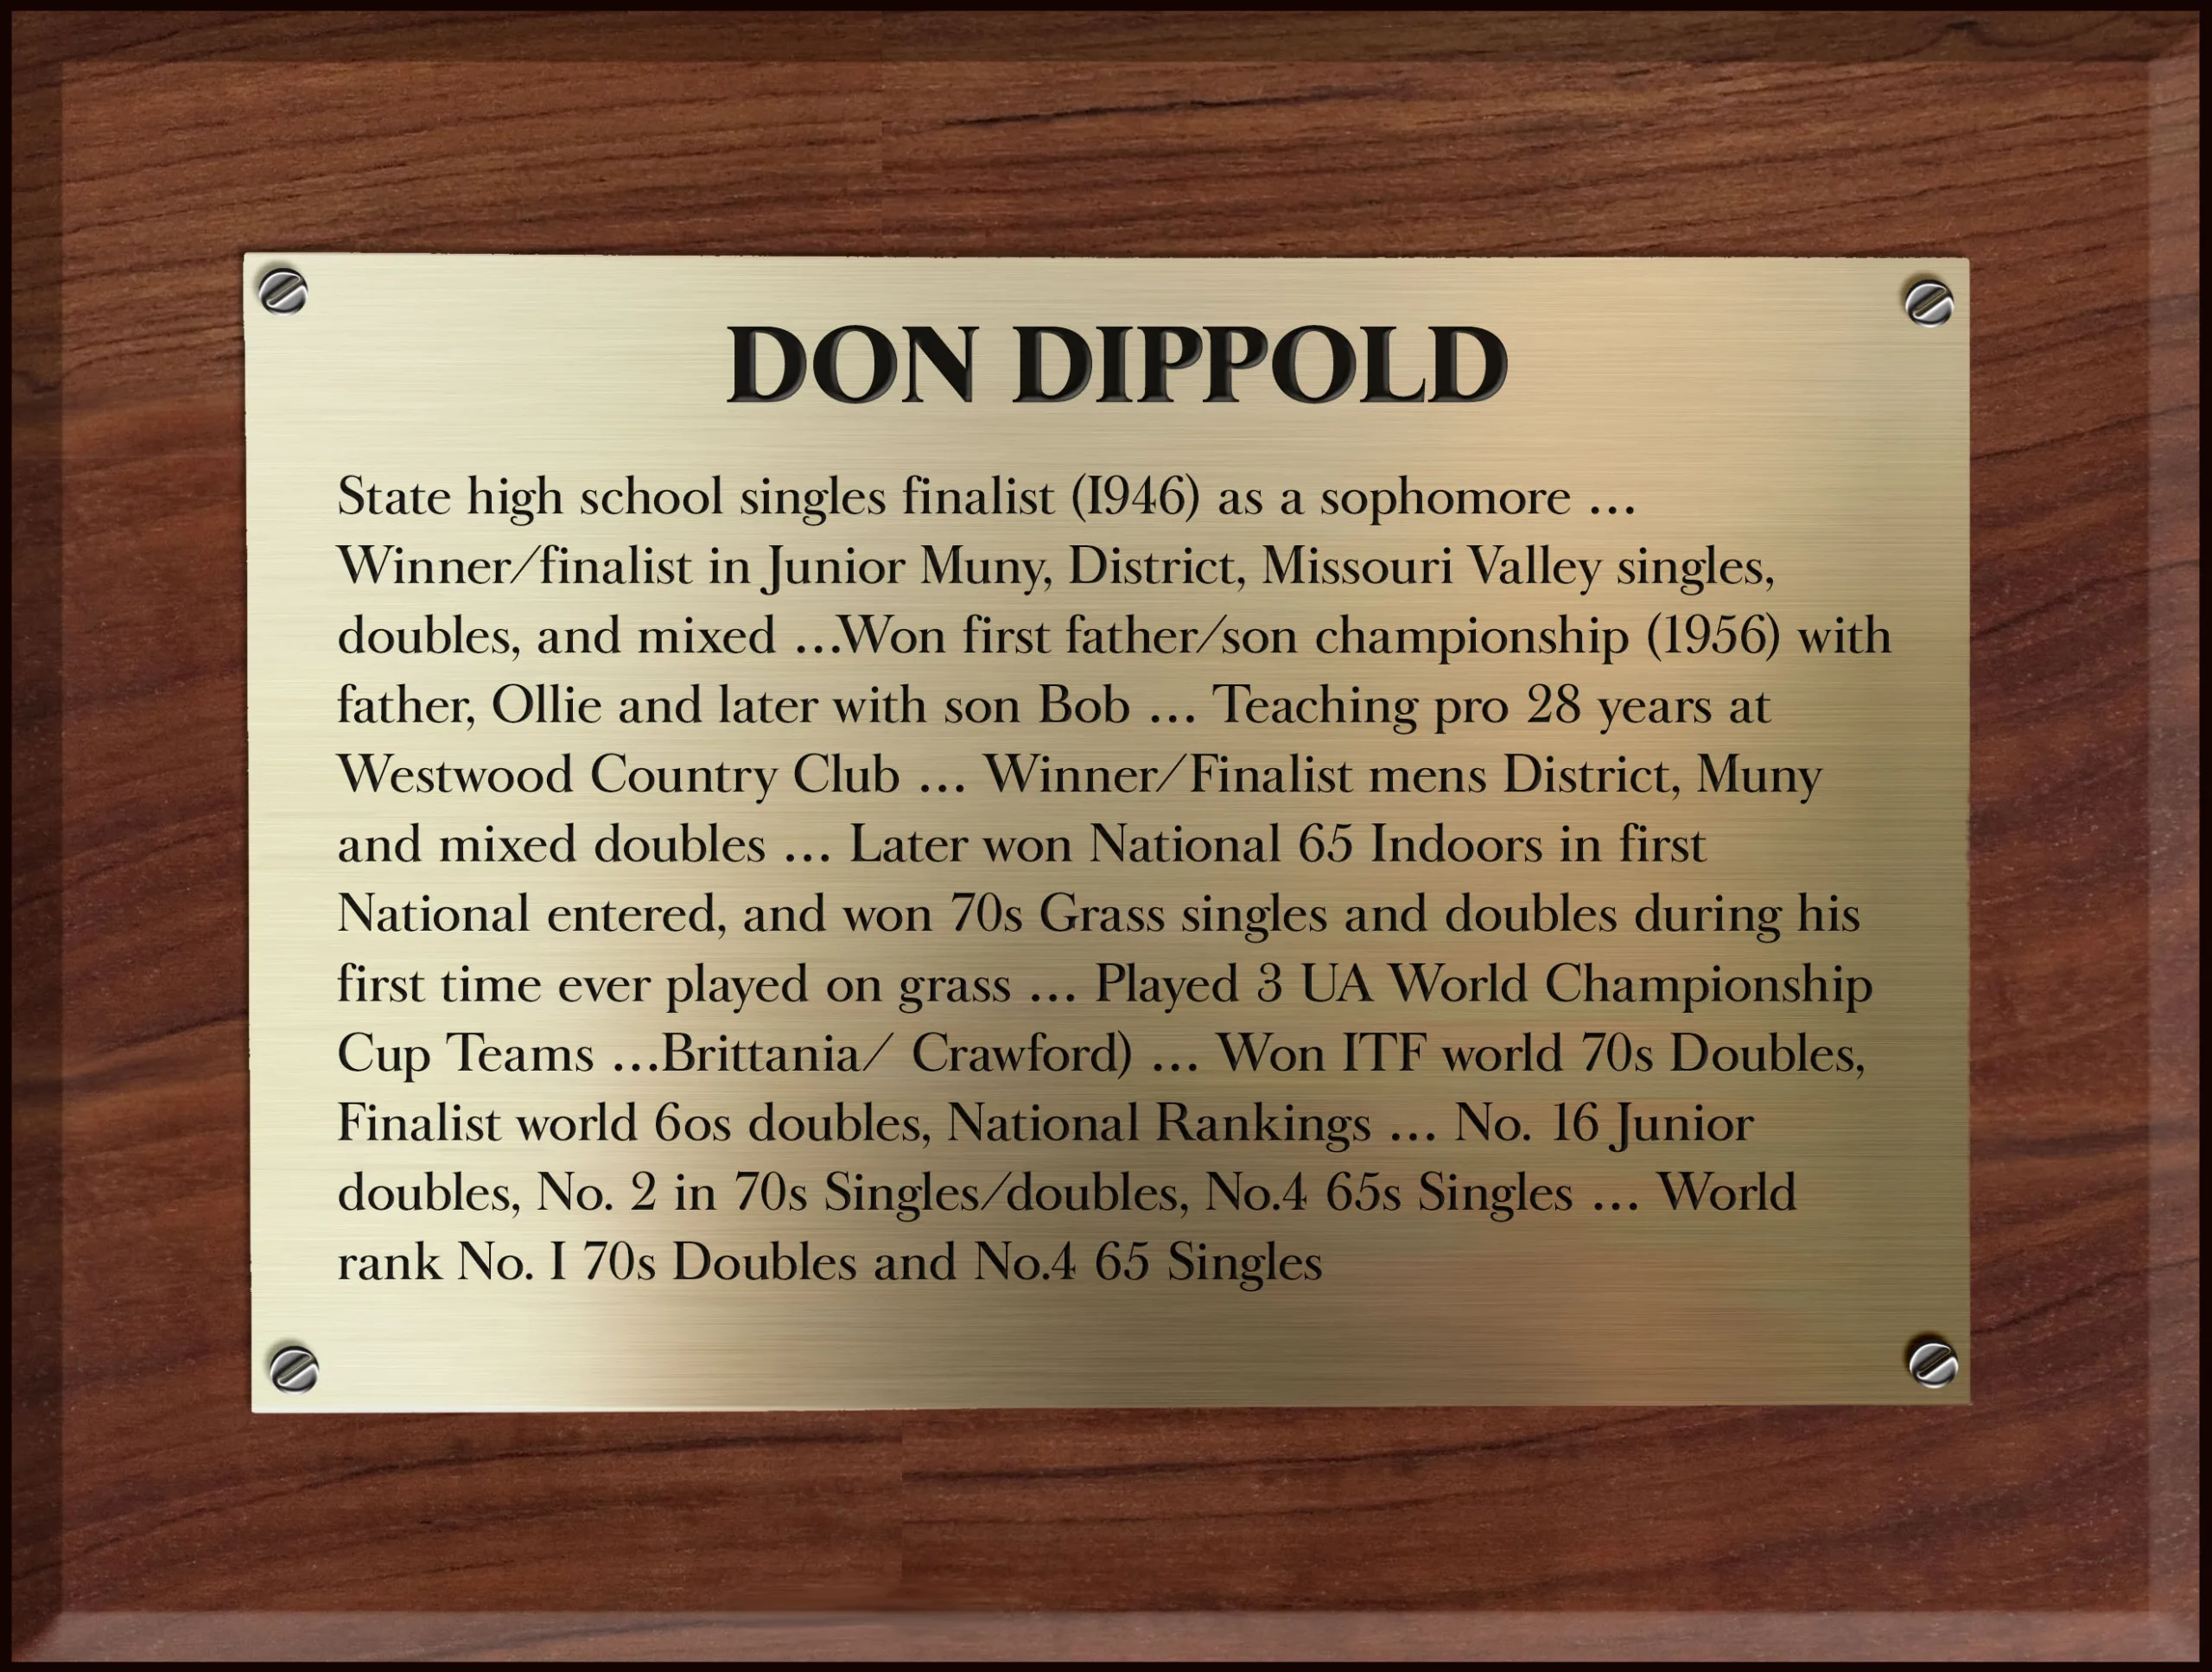 Don Dippold